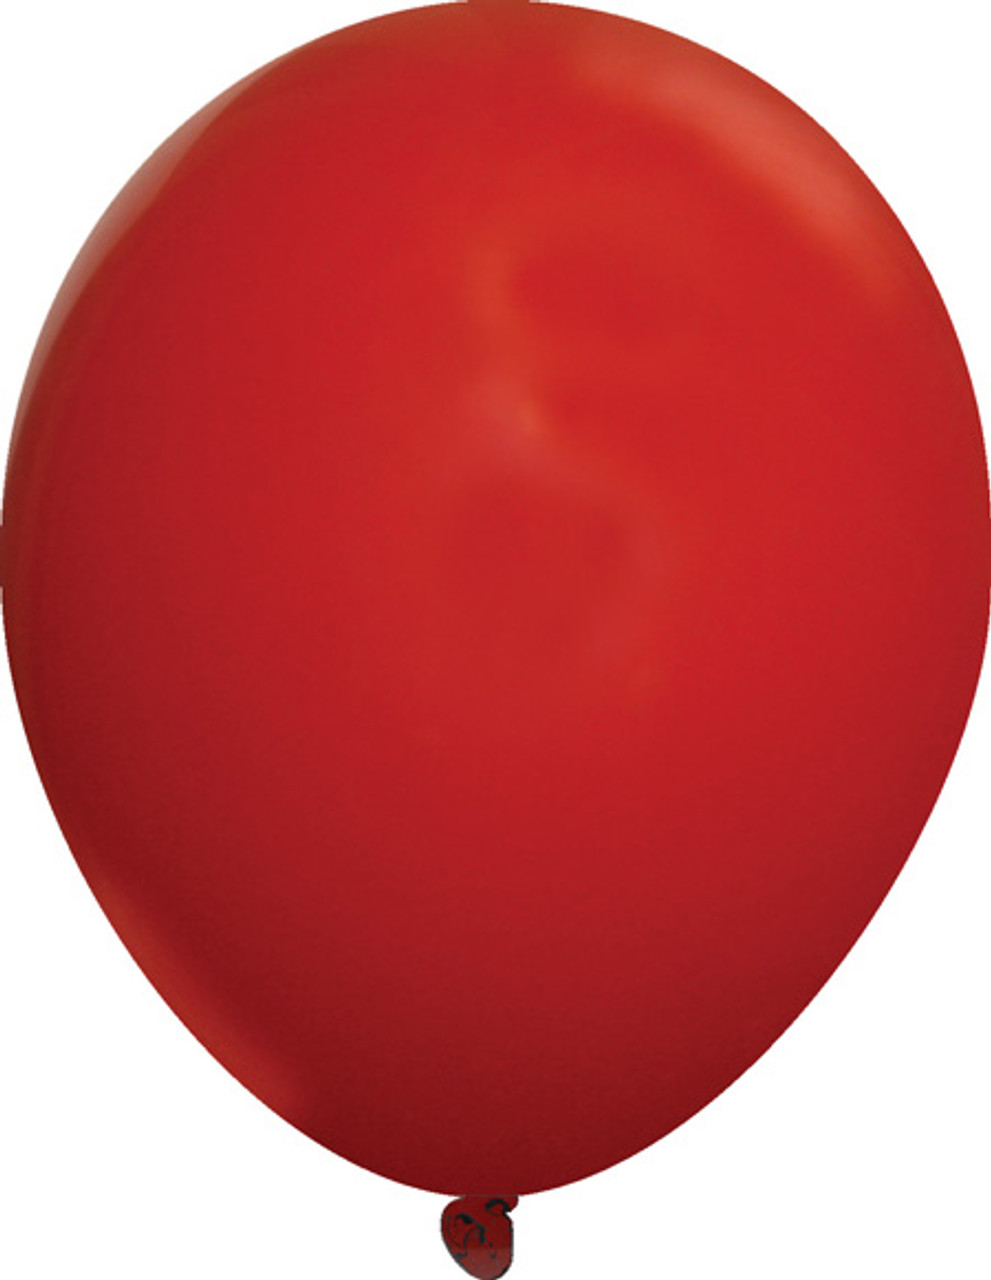 Custom Printed Standard Latex Balloons red